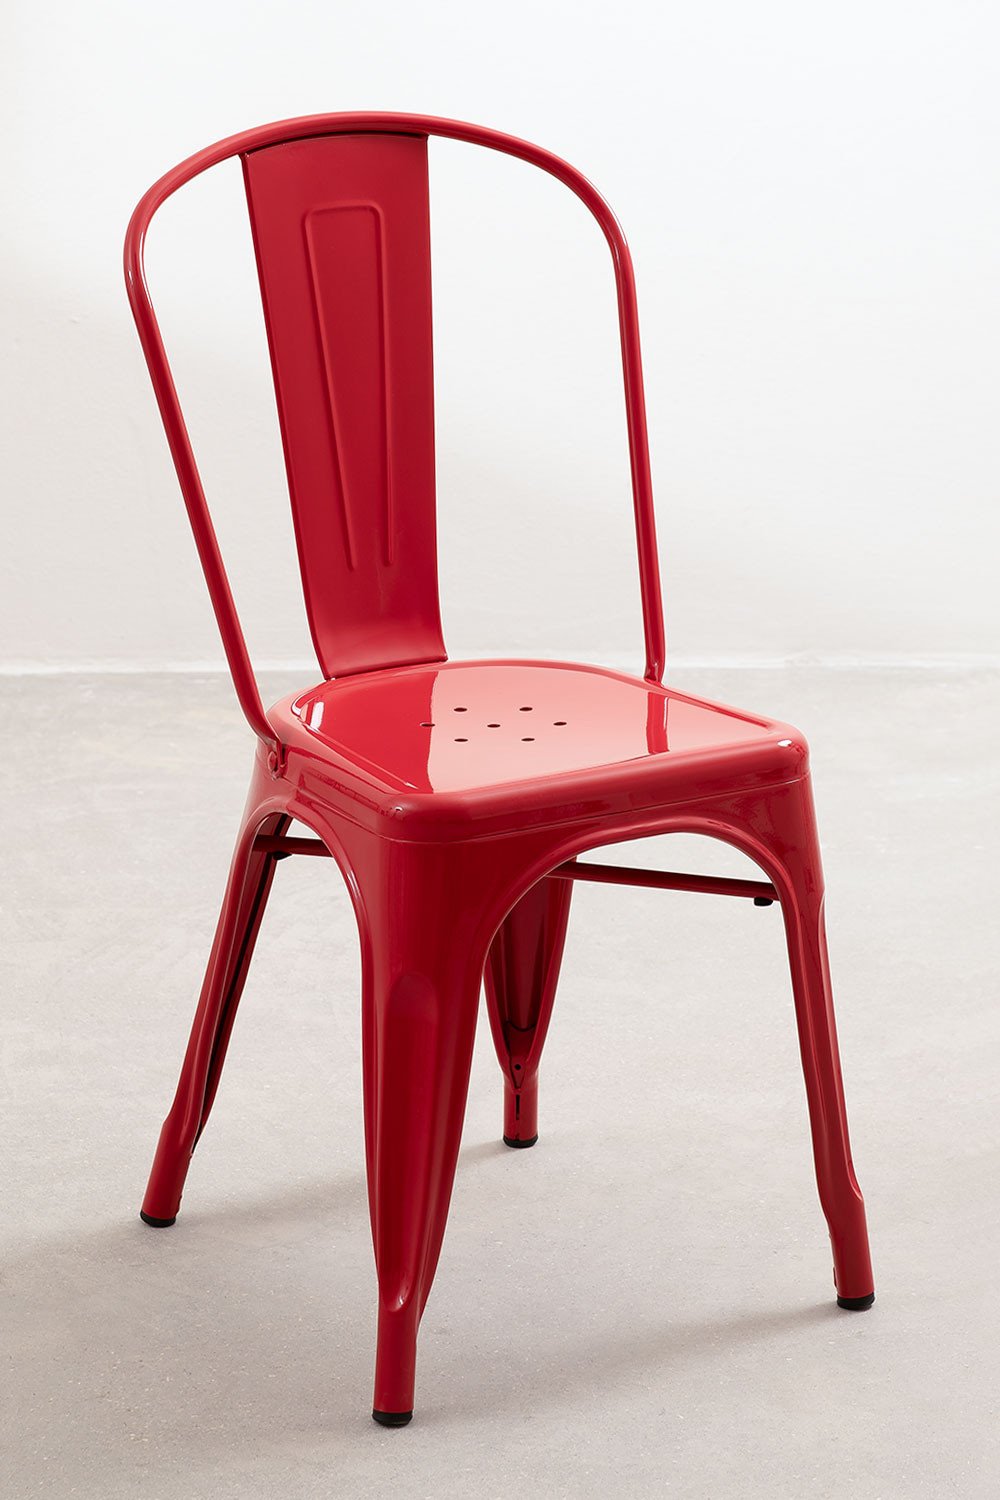 Stapelbare stoel LIX , galerij beeld 1